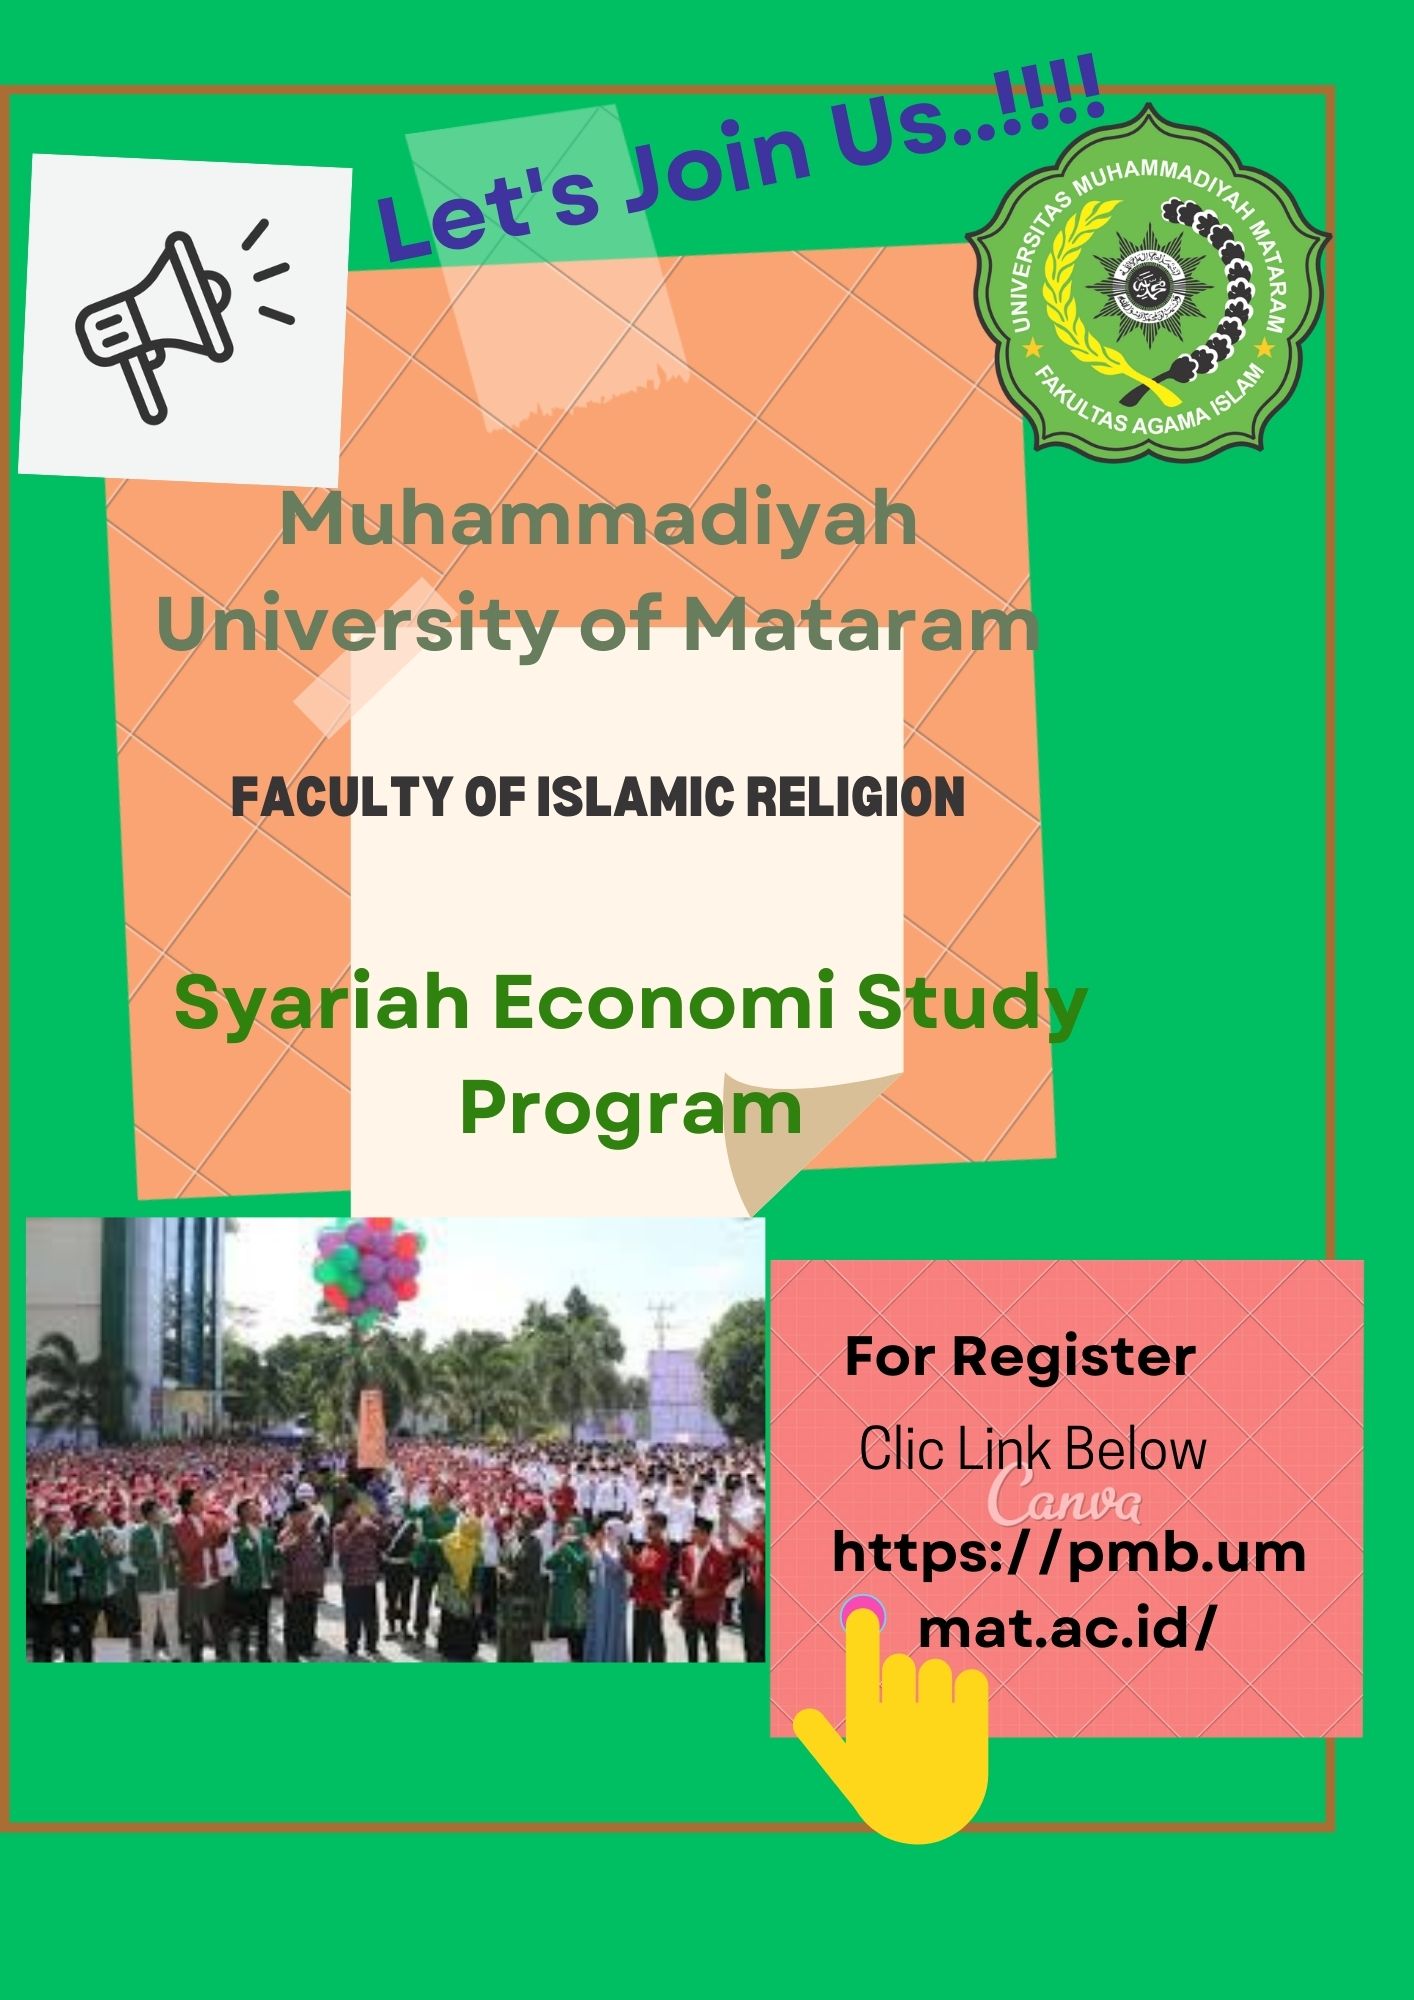 Come join us in the Islamic Economics Study Program